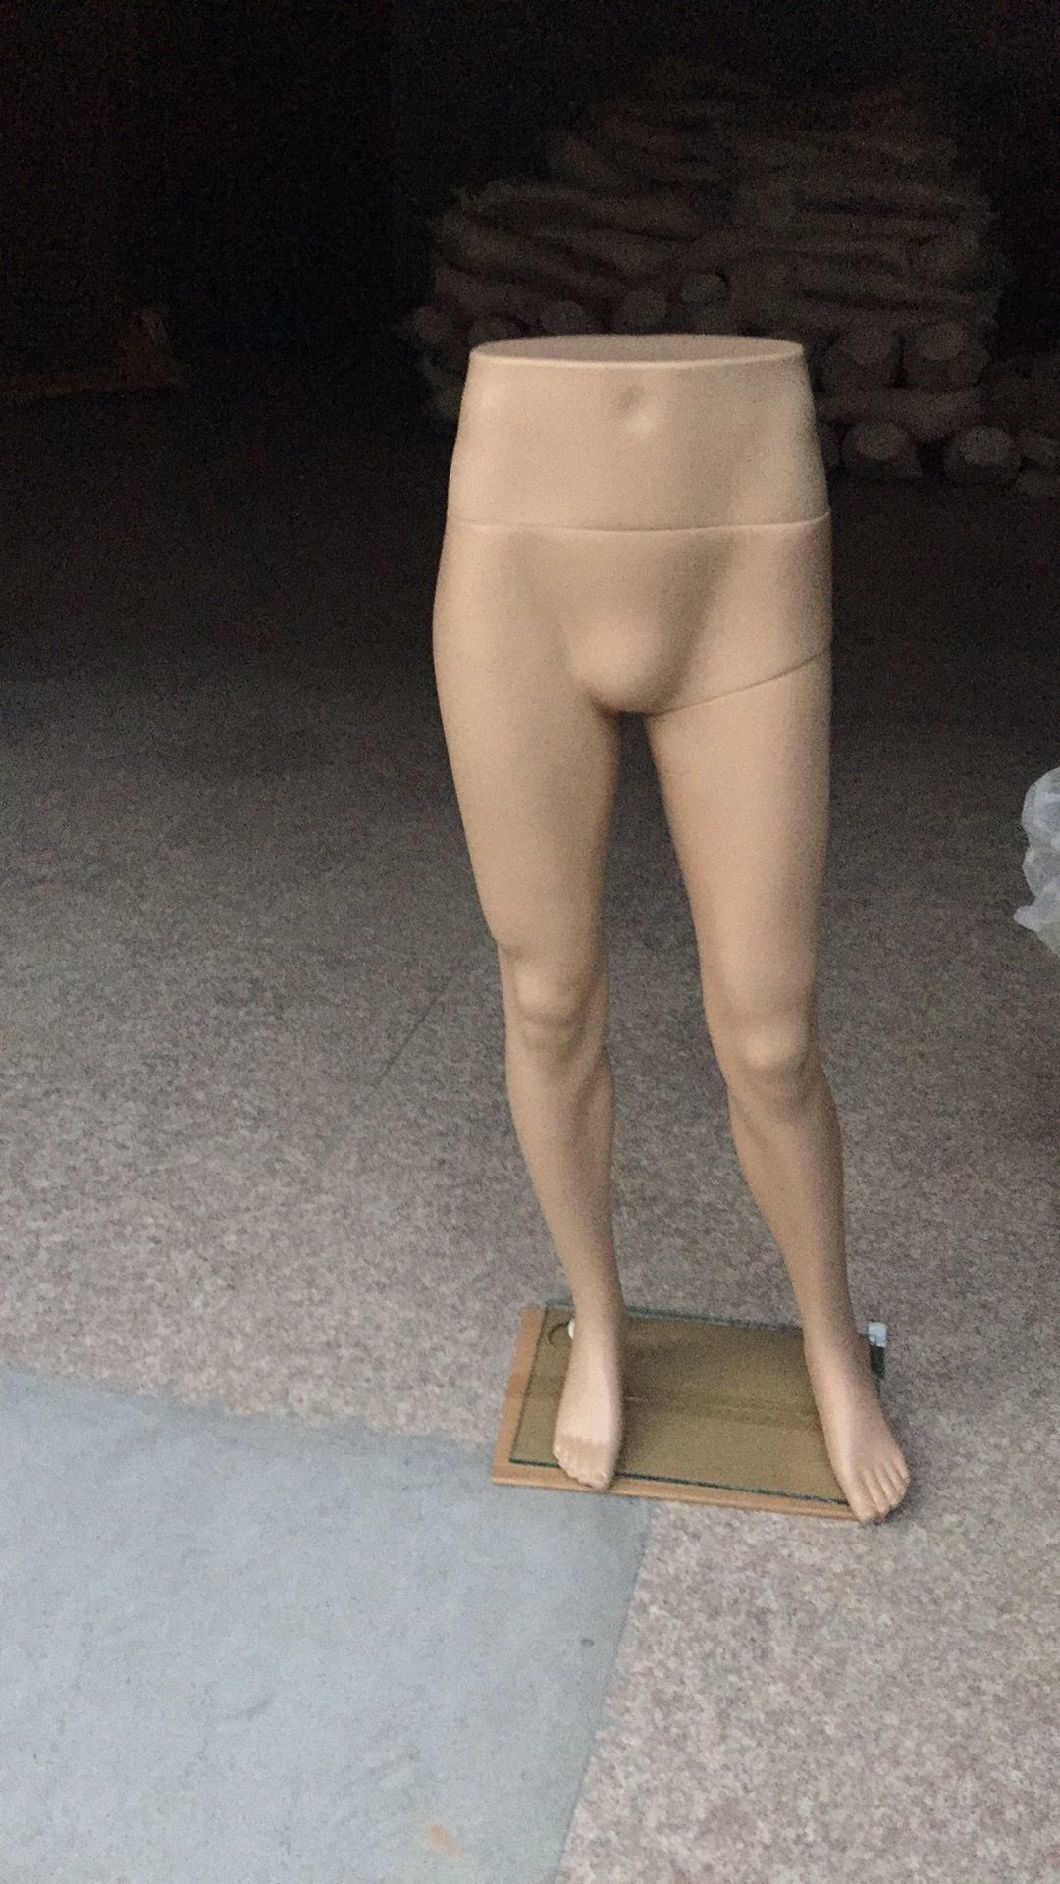 Plastic Male Standing Pant Half-Body Mannequin Model